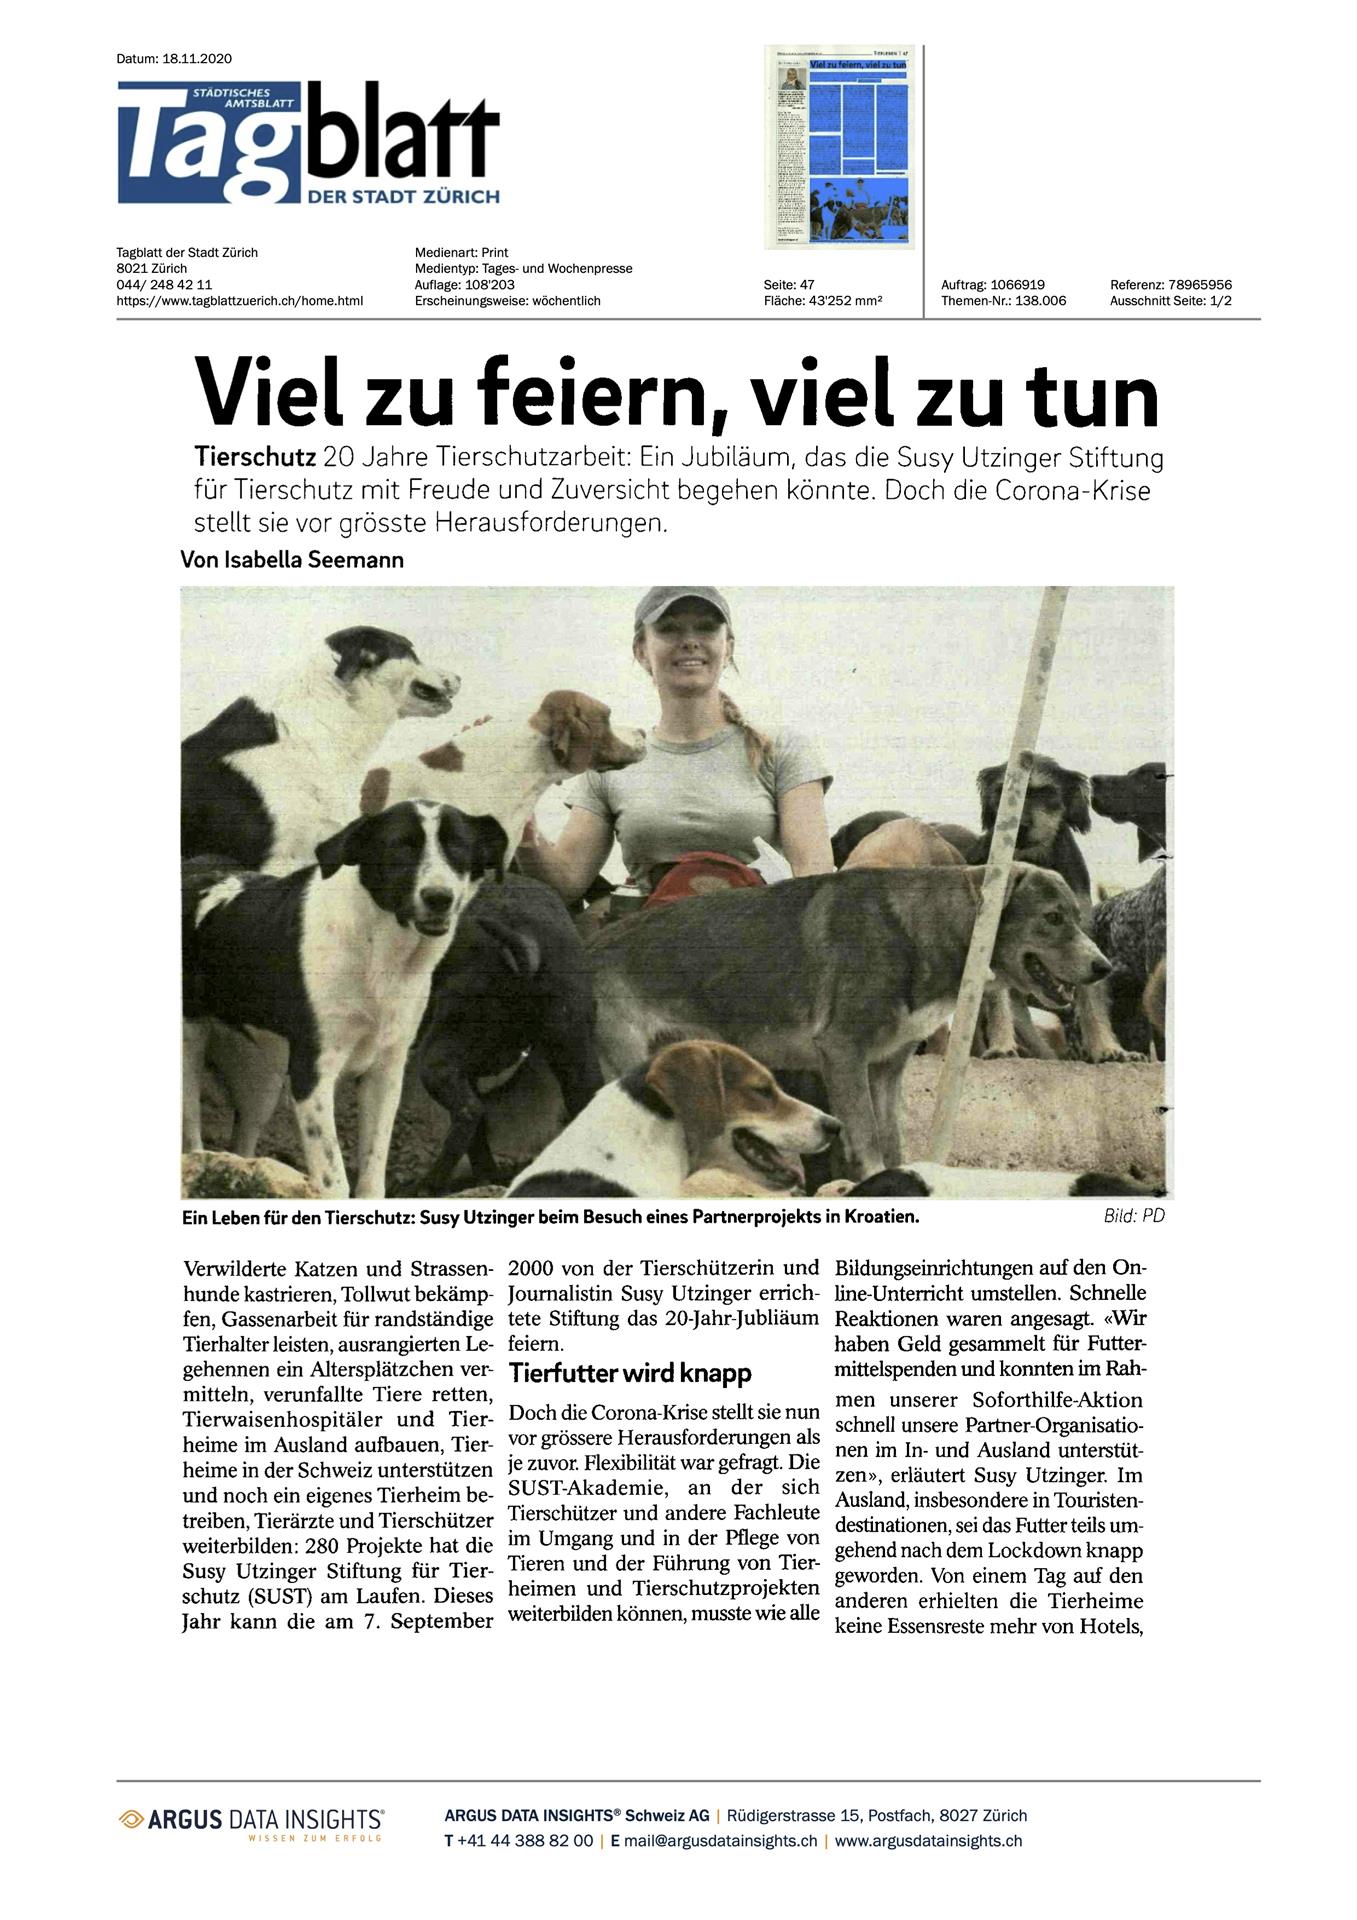 Tagblatt der Stadt Zürich - November 2020